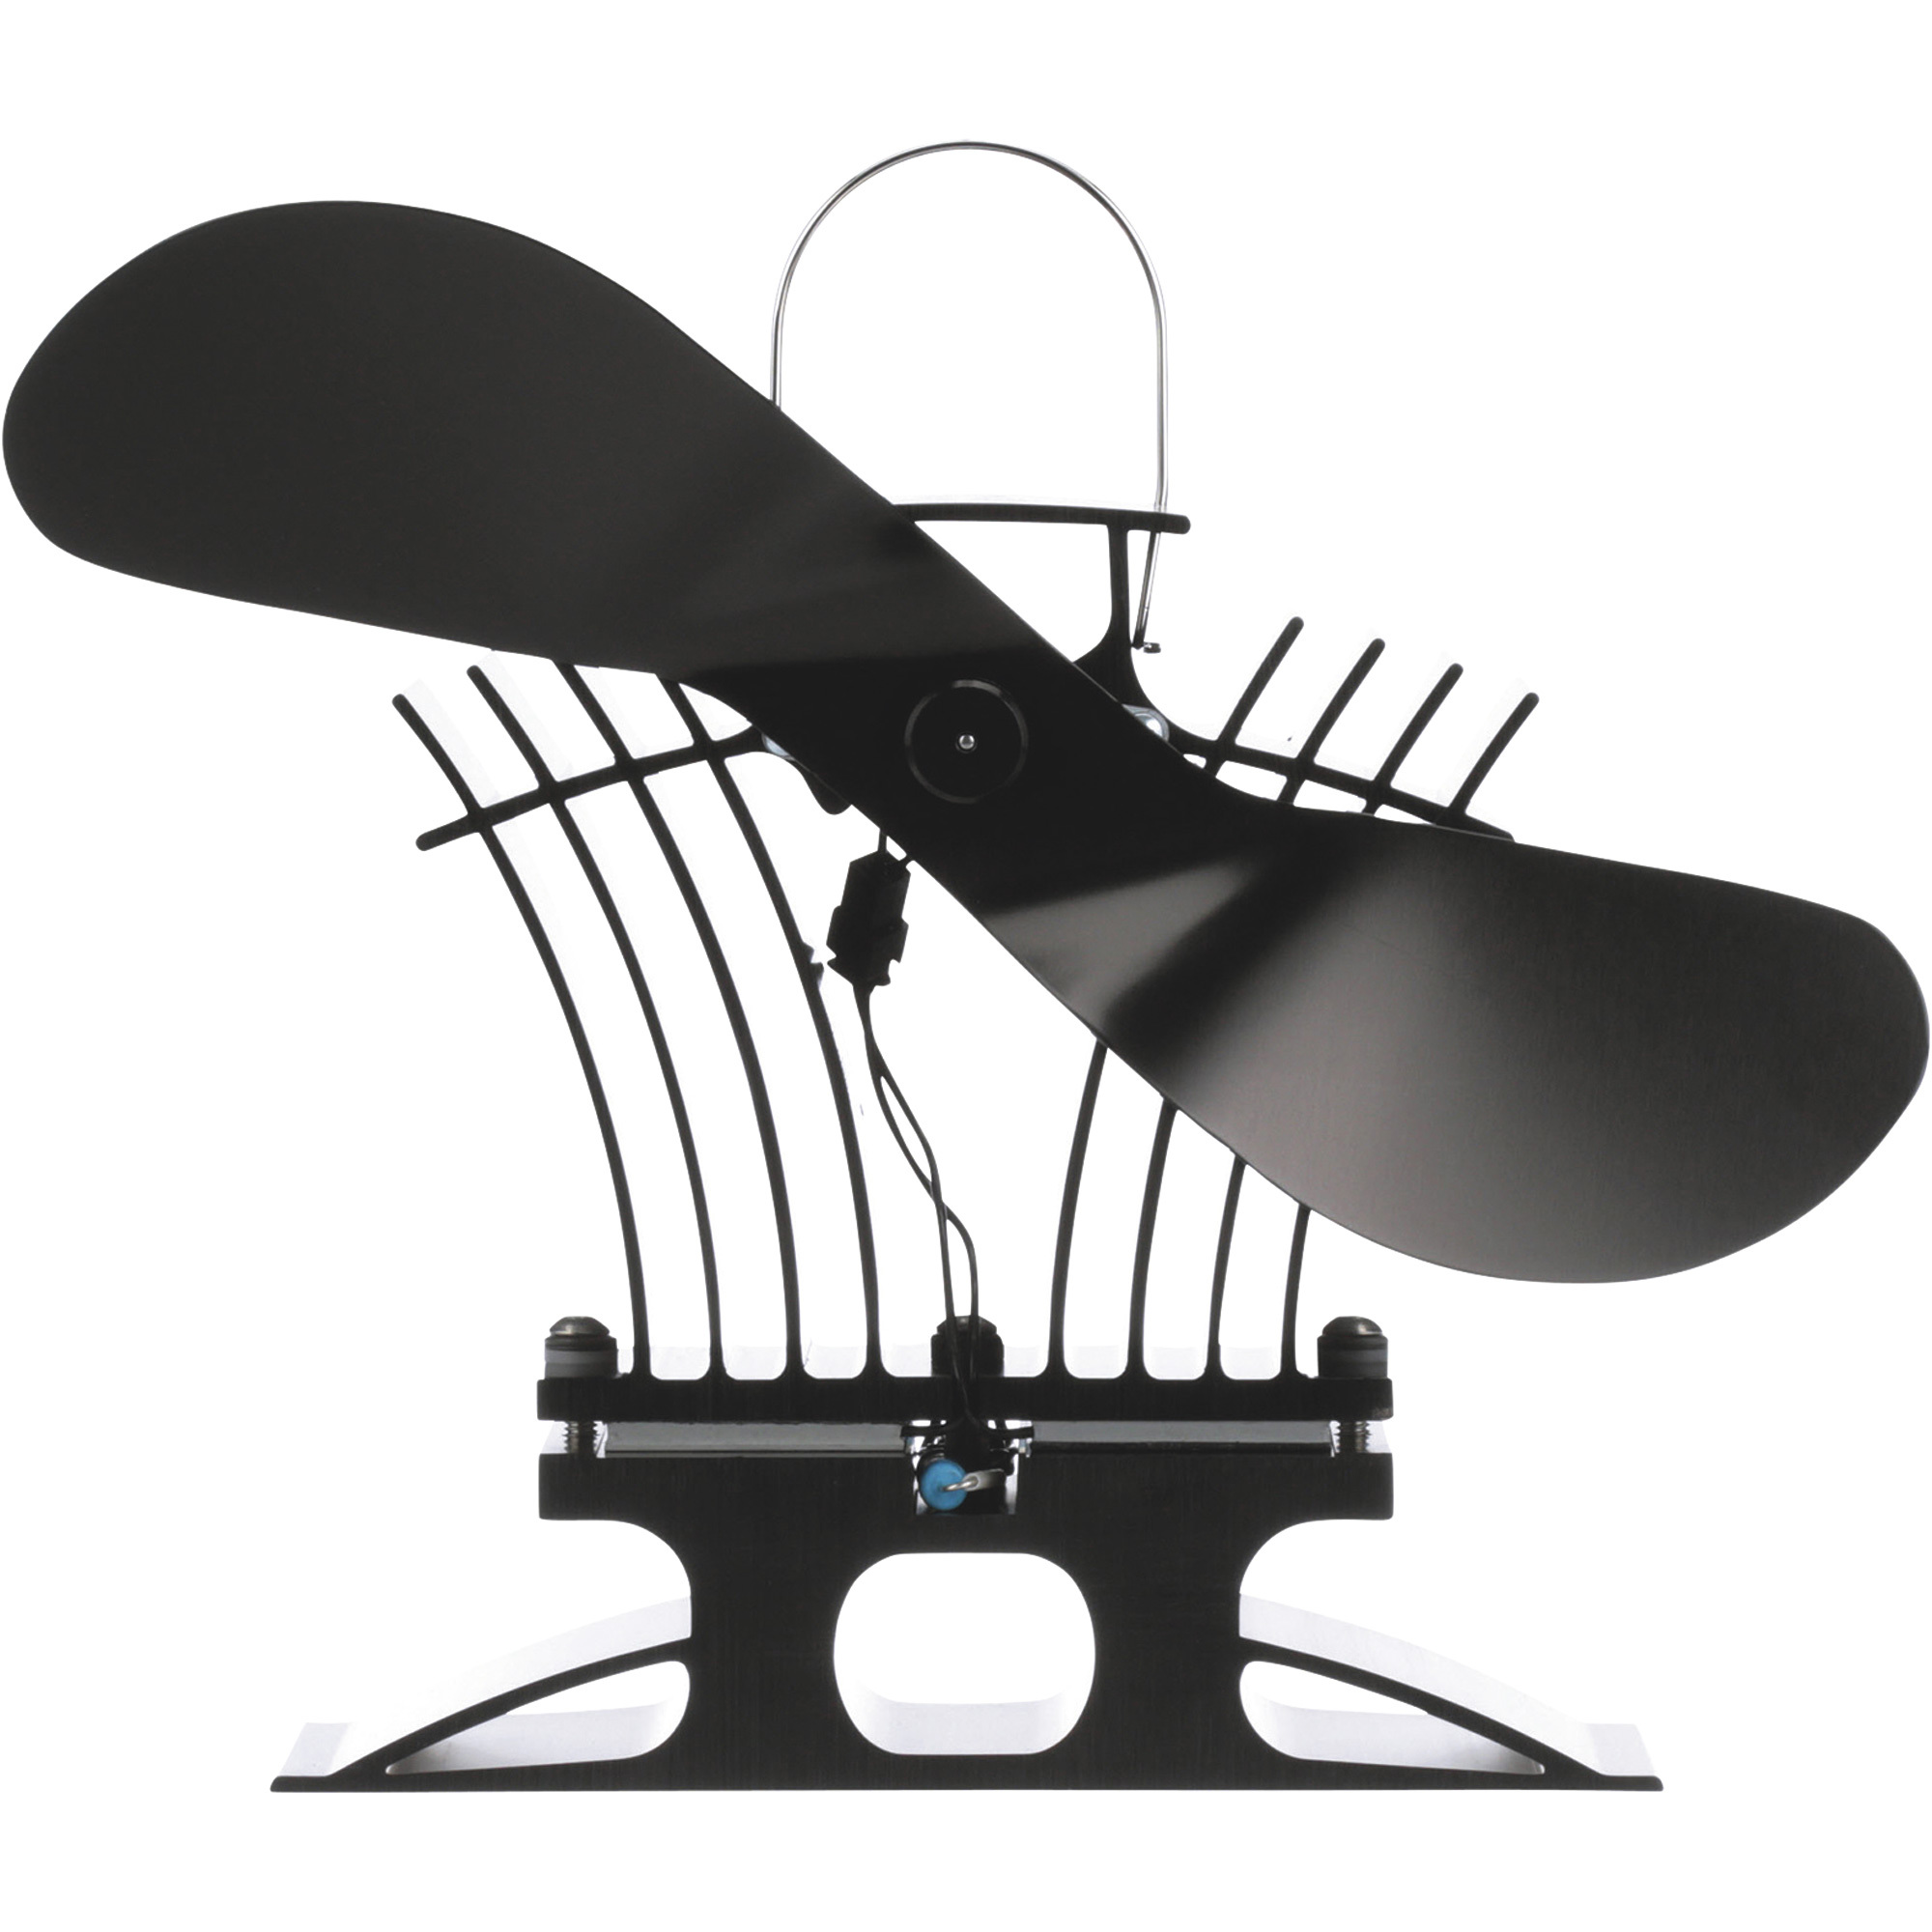 Ecofan BelAir Heat-Powered Stove Fan For Low Temp Stoves â140 CFM, Black, Model 806CAXBX